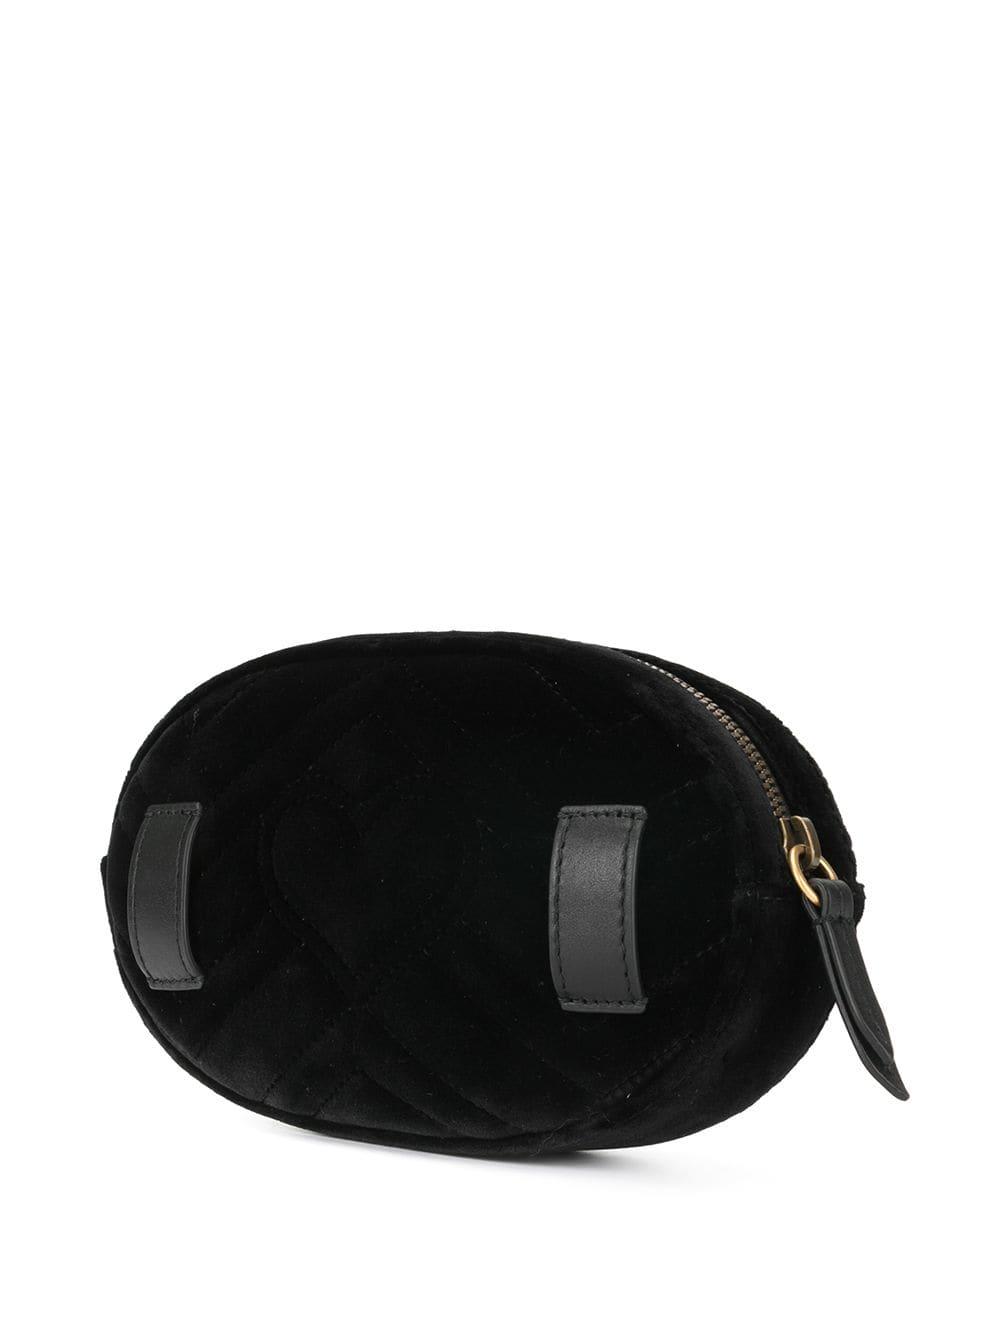 Gucci Marmont Velvet Belt Bag in Black - Lyst